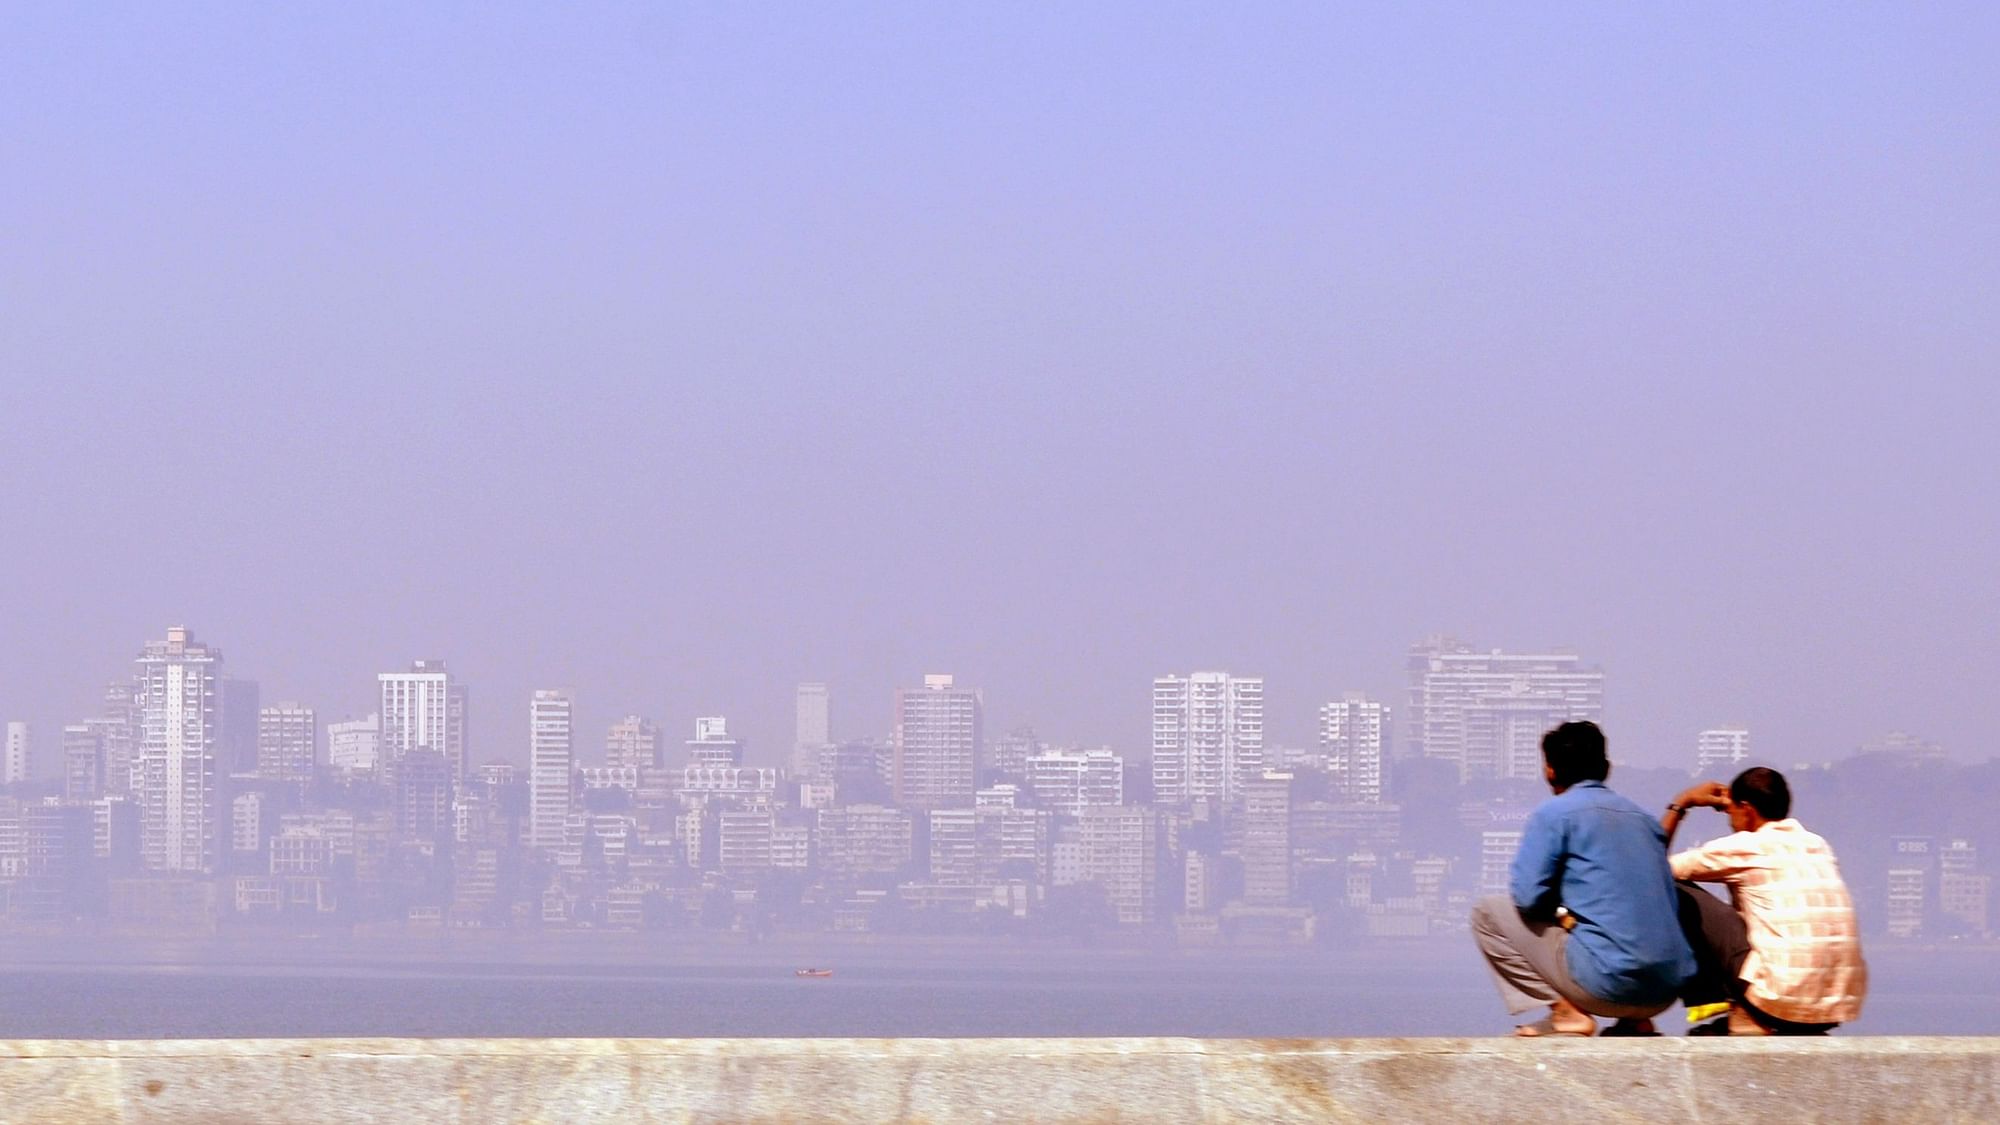 Polluted Mumbai on the horizon. (Photo Courtesy: Flickr/<a href="https://www.flickr.com/photos/uopfindsomt/">Emma Jespersen</a>)